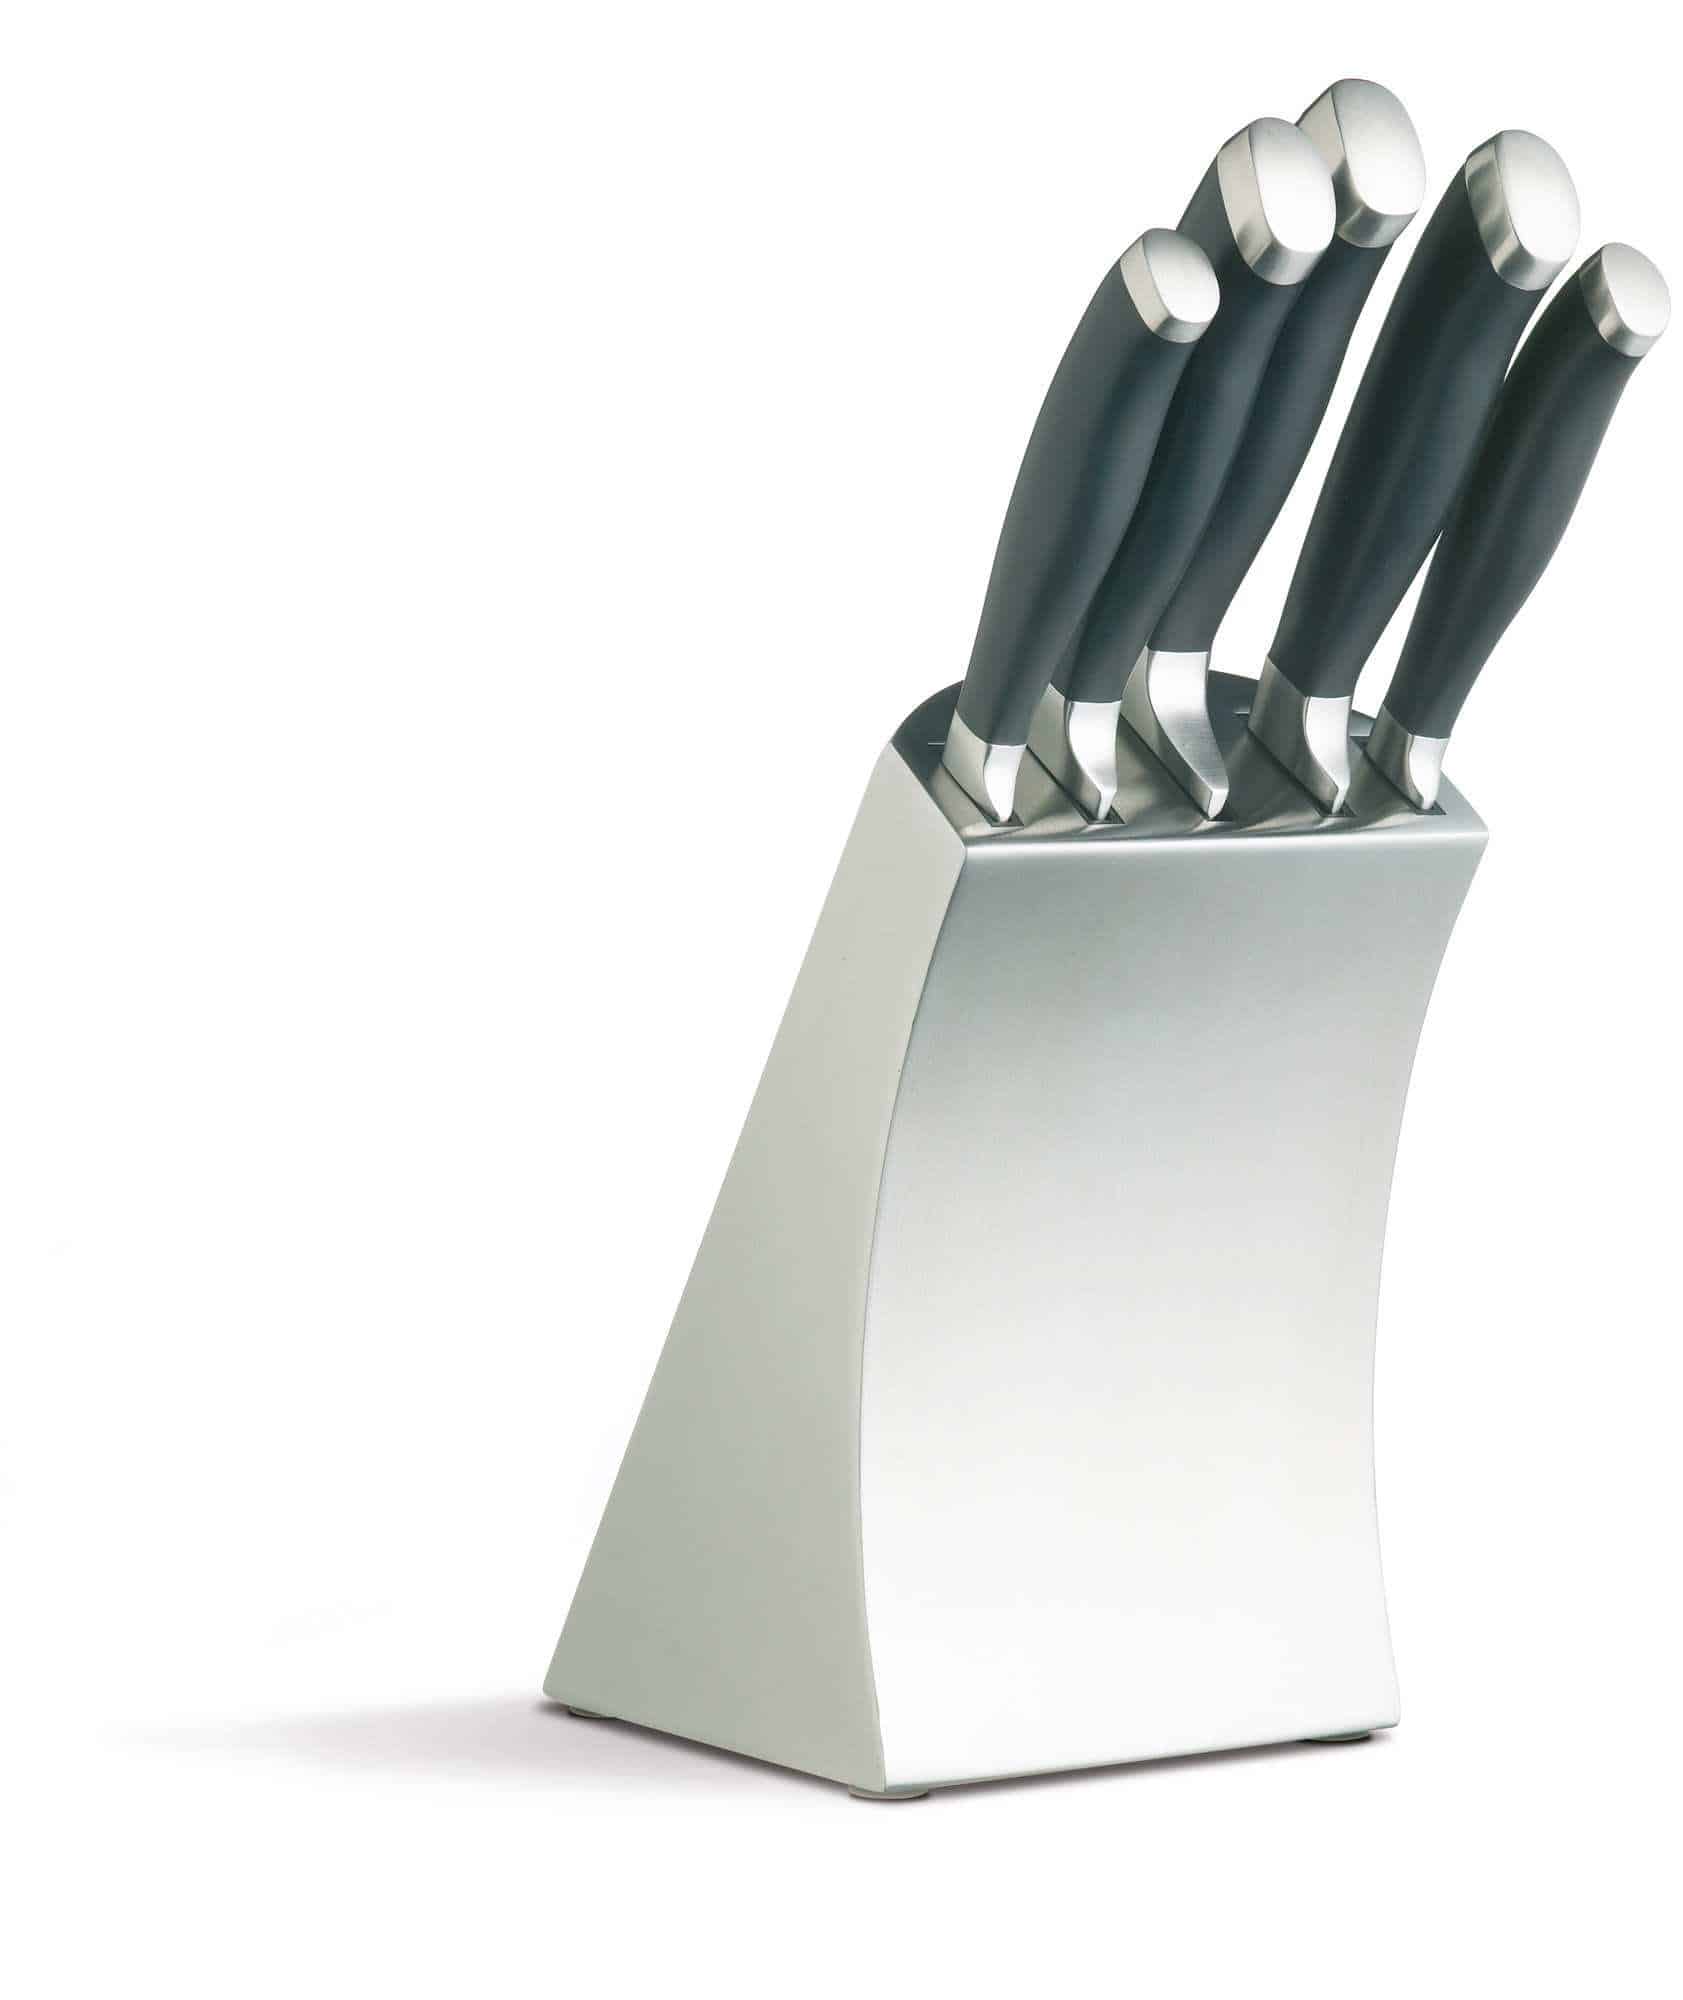 Kitchen Knife Set in Stainless Steel Block MasterClassTrojan